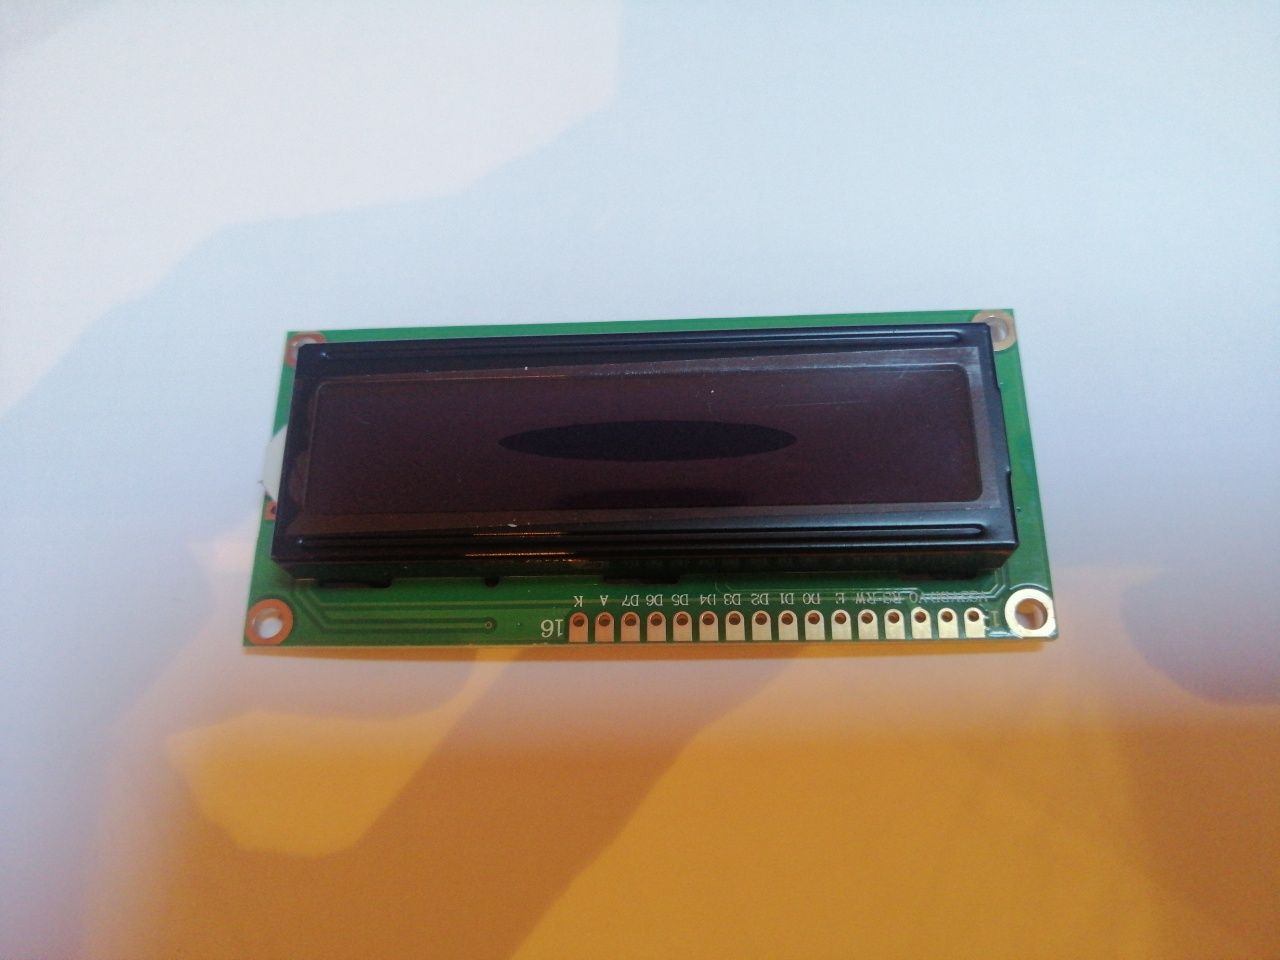 Ecrã display LCD para raspberry ou arduino